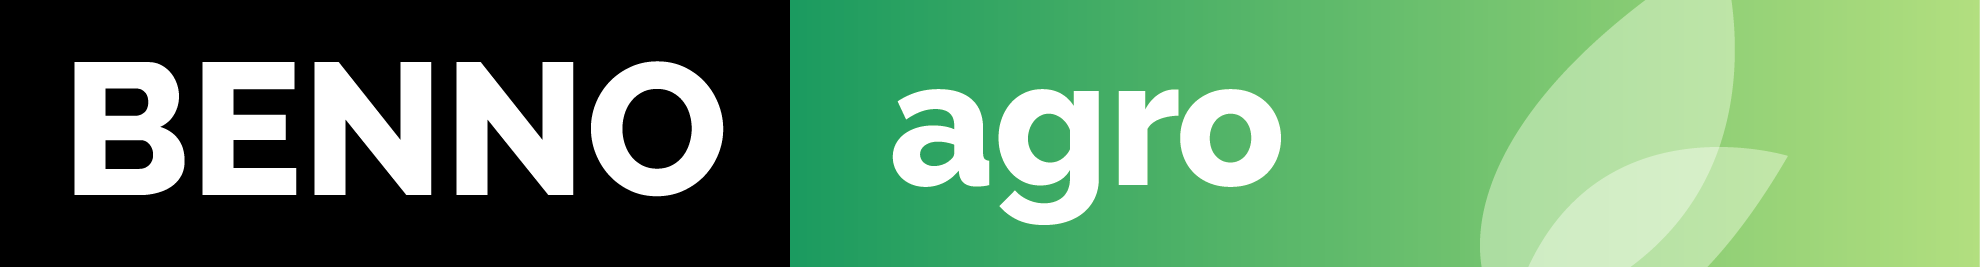 Agro banner